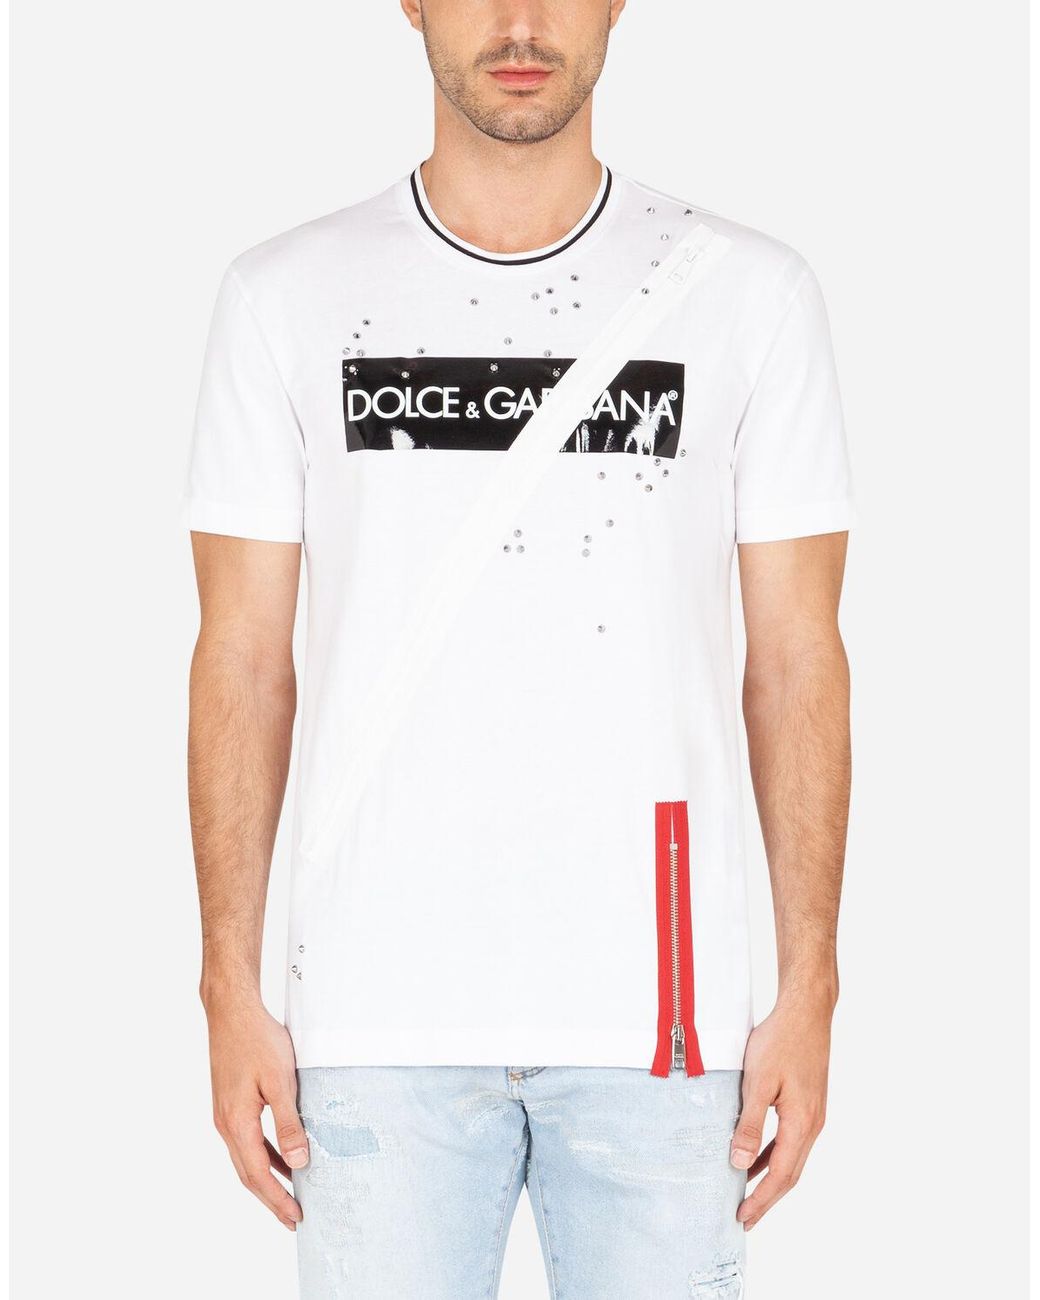 Dolce & Gabbana Denim T-shirt With Dolce&gabbana Print And Zipper in ...